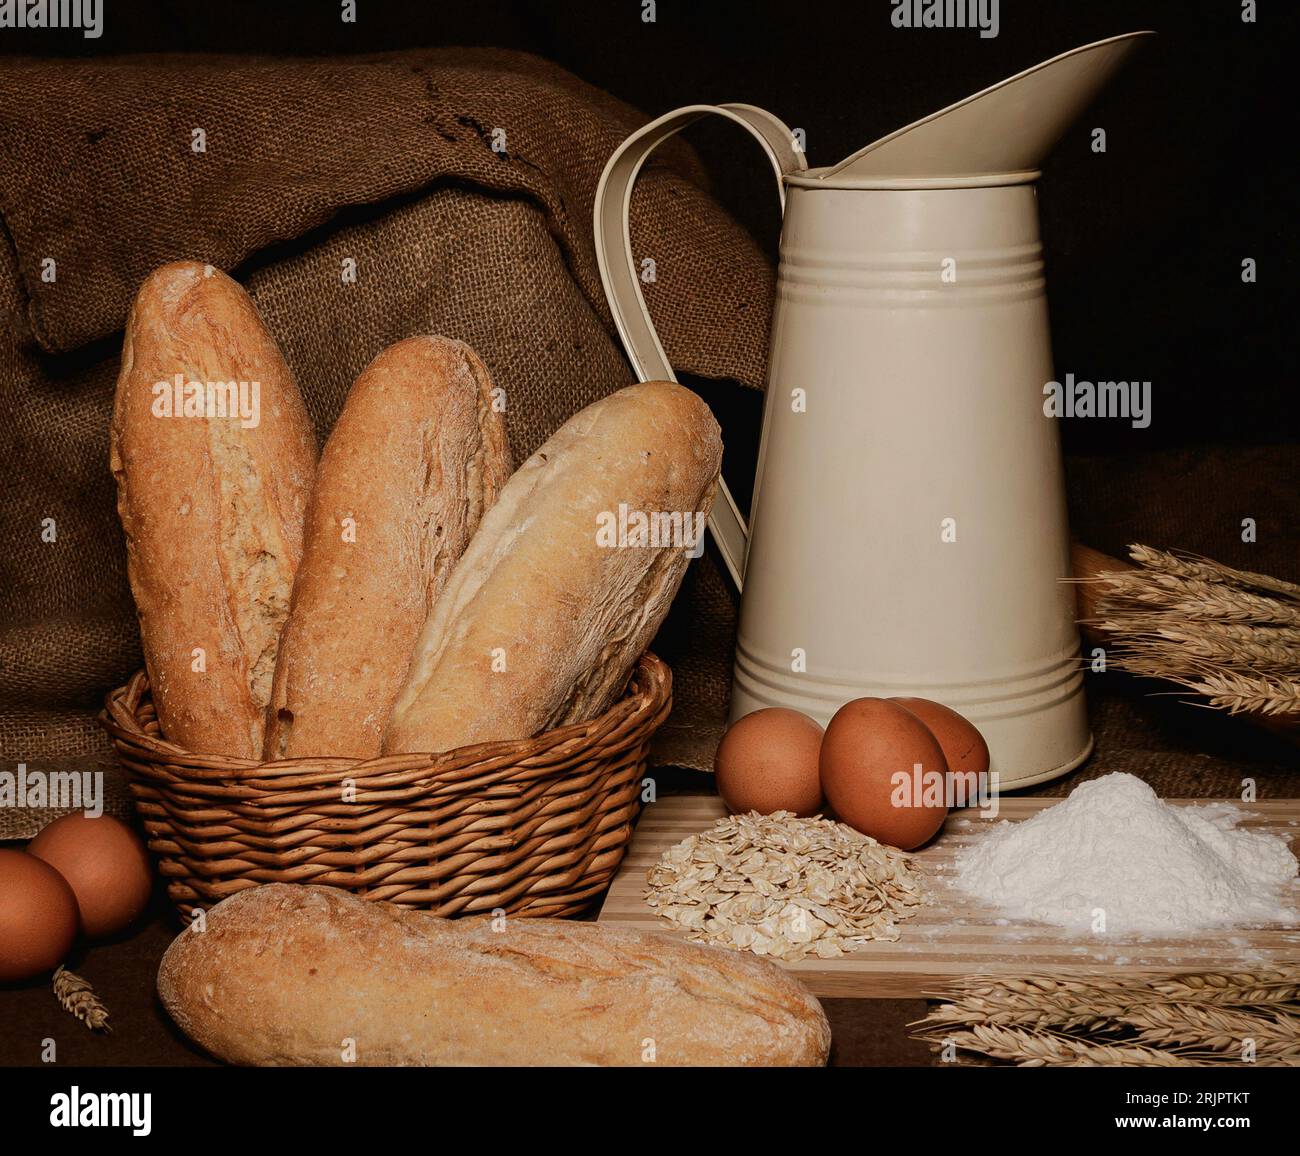 Rustic farmhouse bread, eggs and milk display Stock Photo